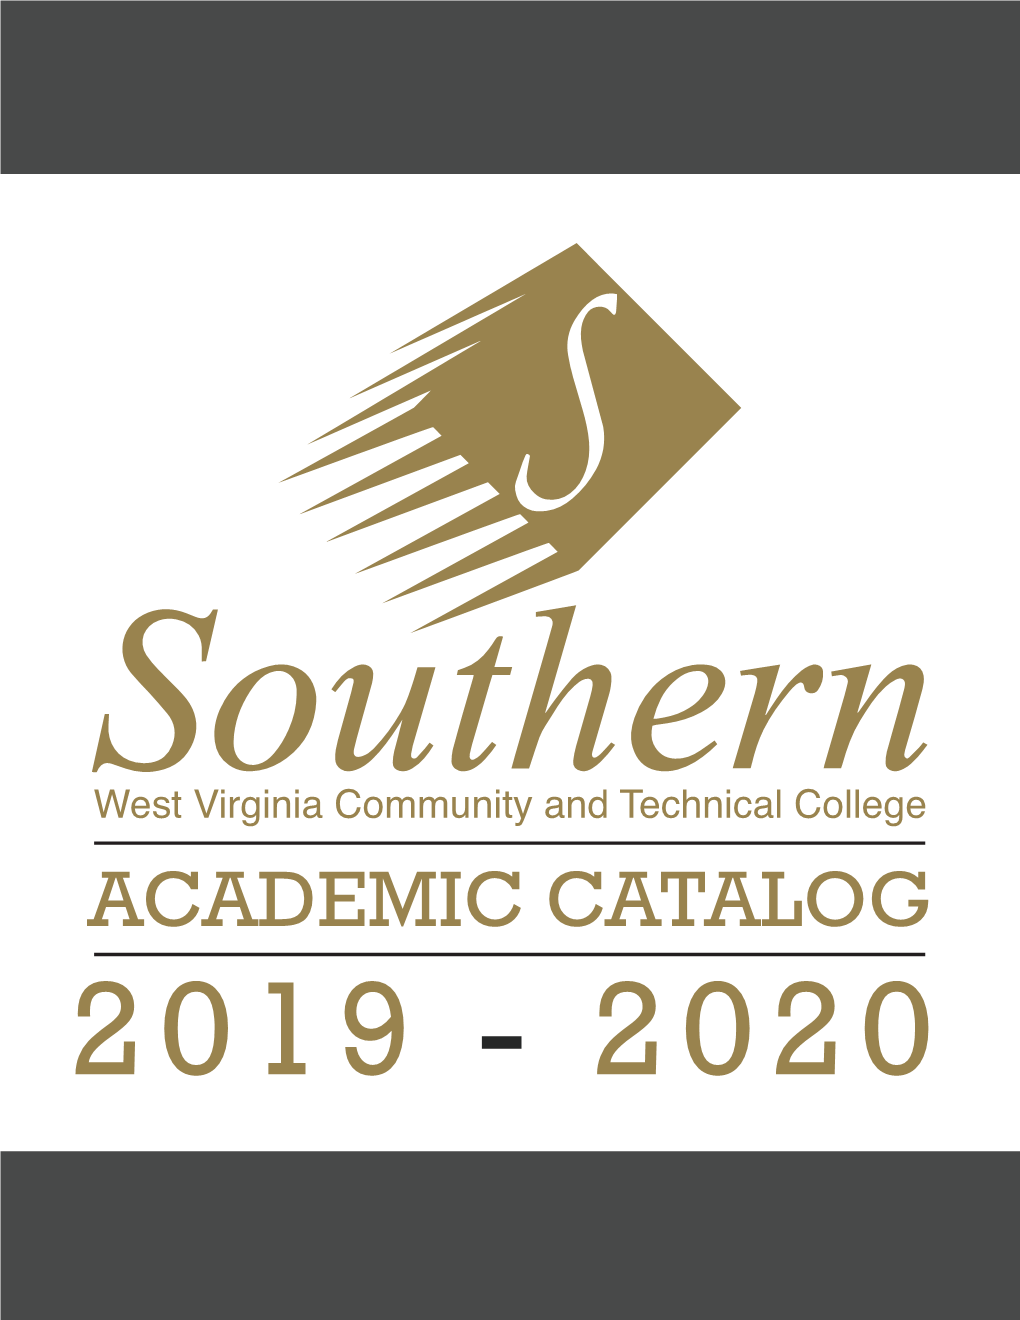 Academic Catalog 2019 - 2020